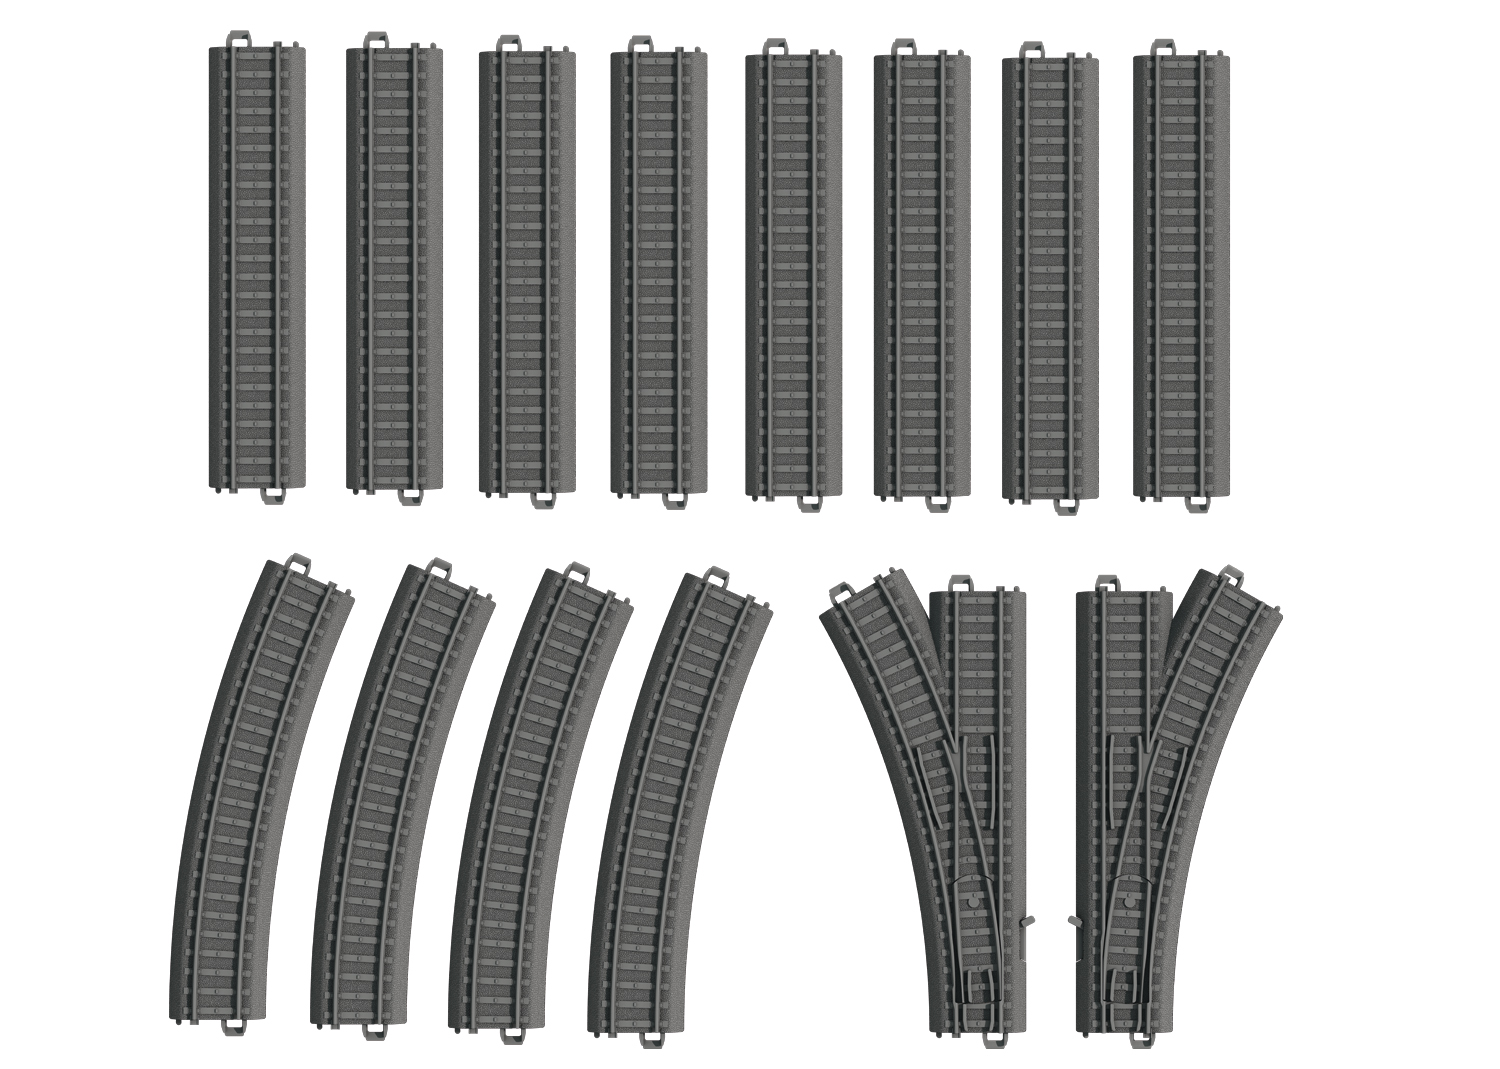 Set 14 sine tren - Plastic Track Extension Set | Marklin